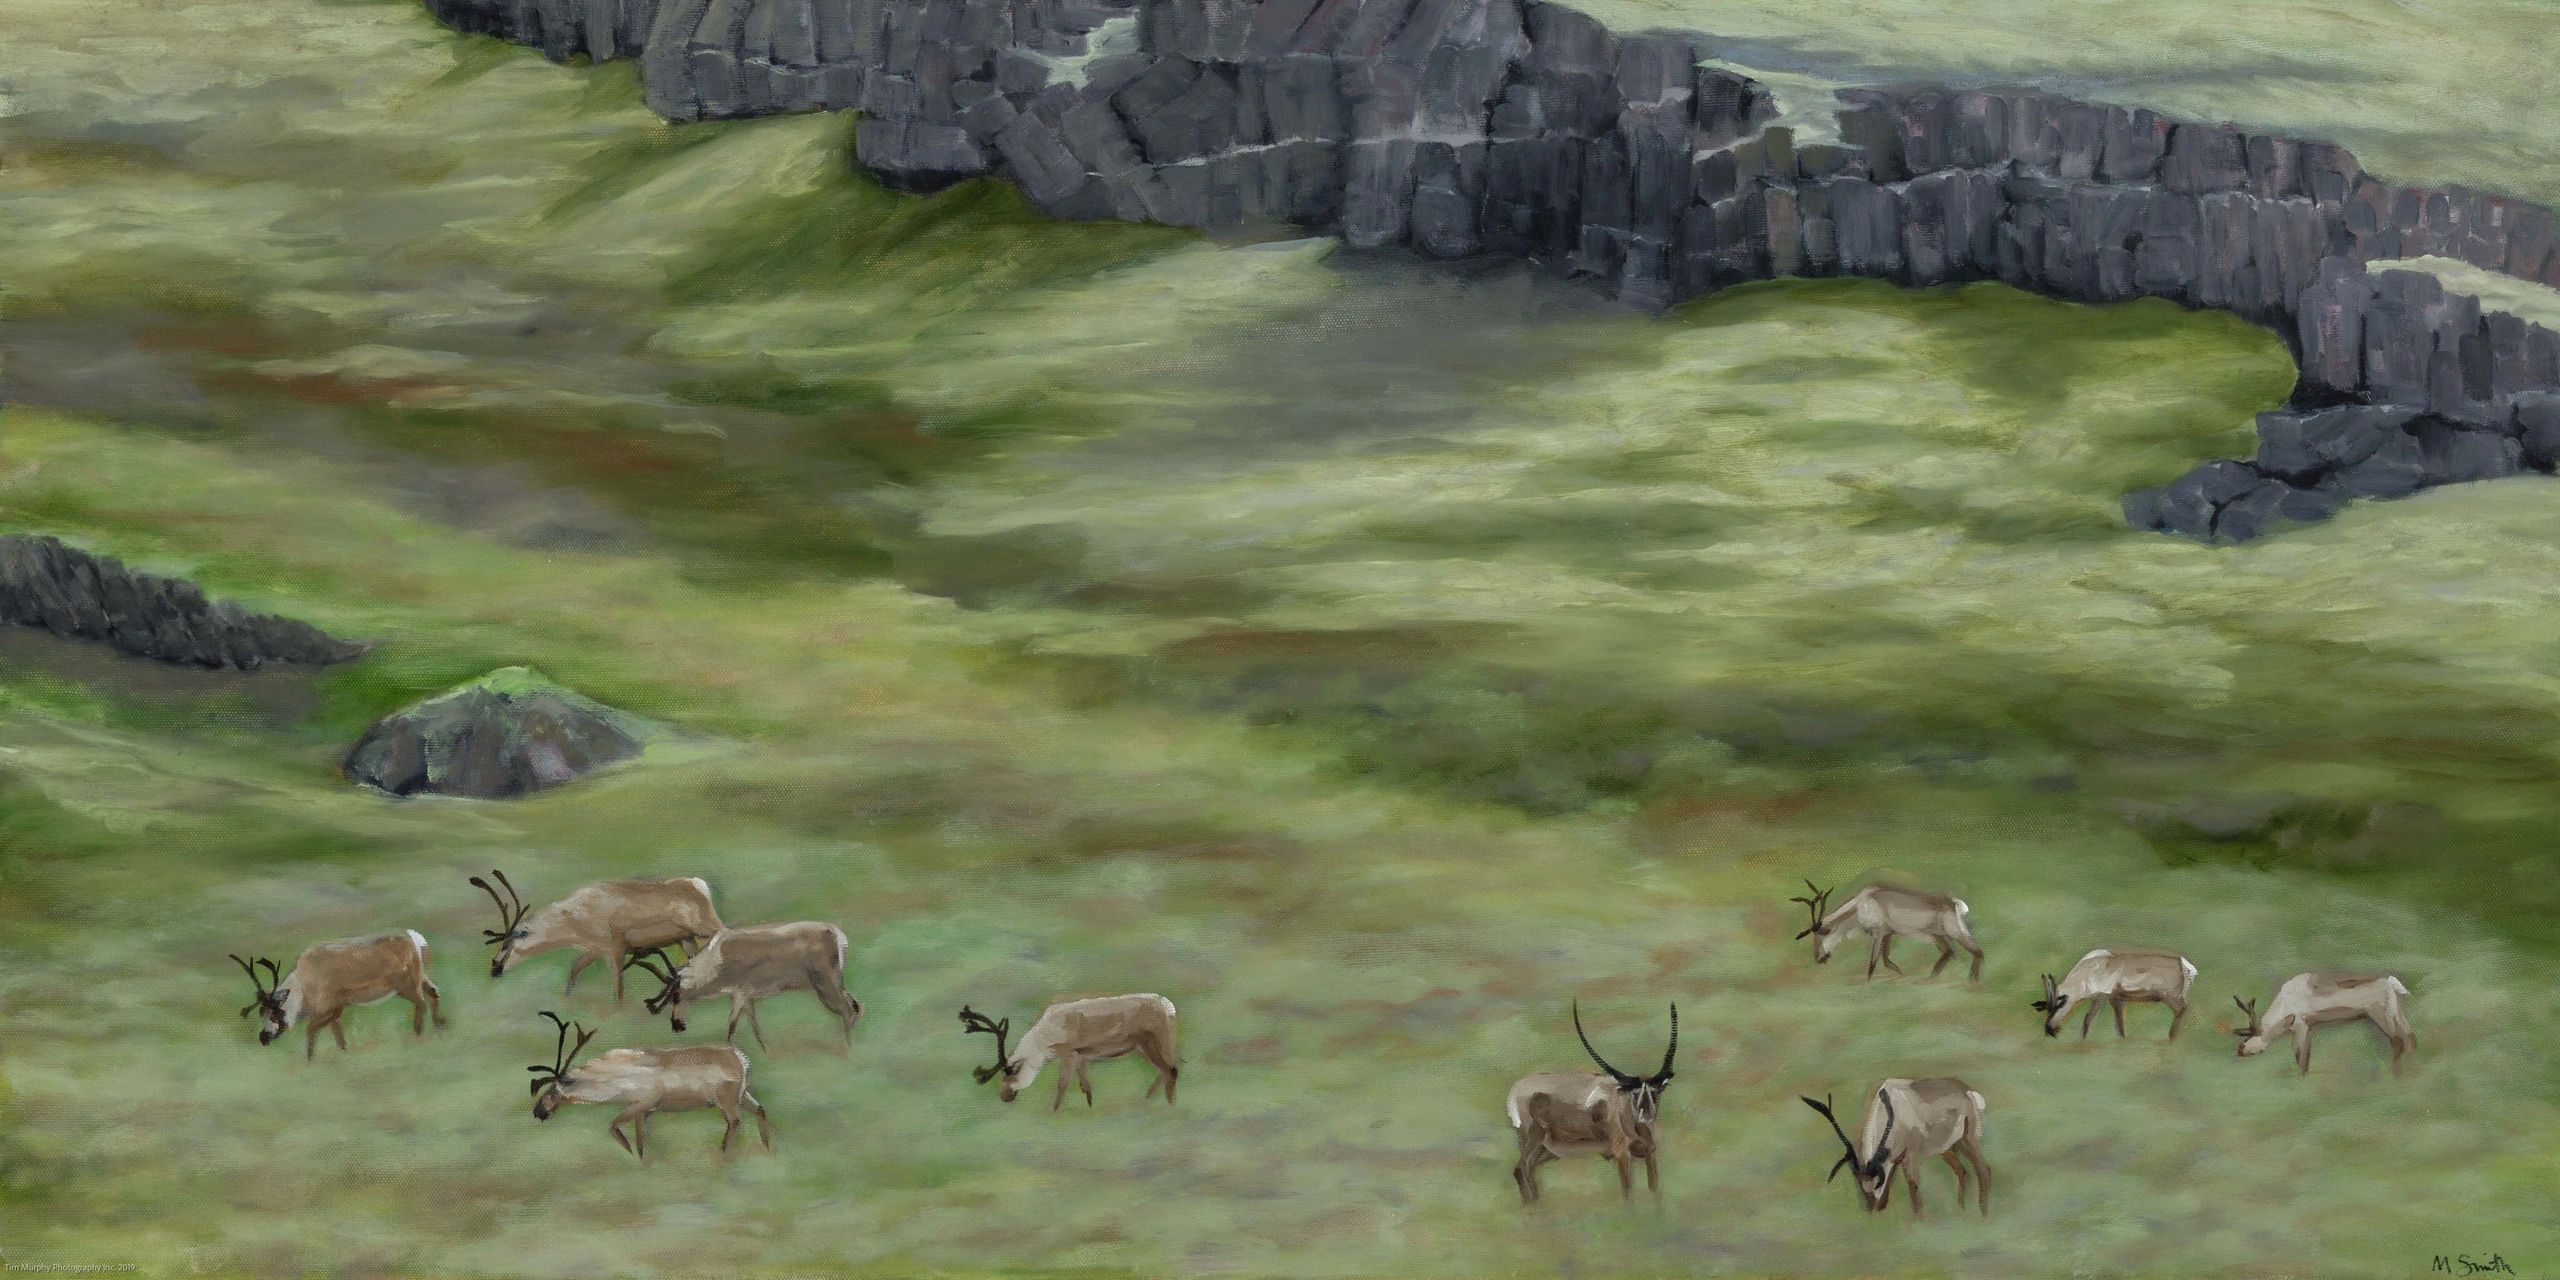 a herd of Reindeer  in Iceland